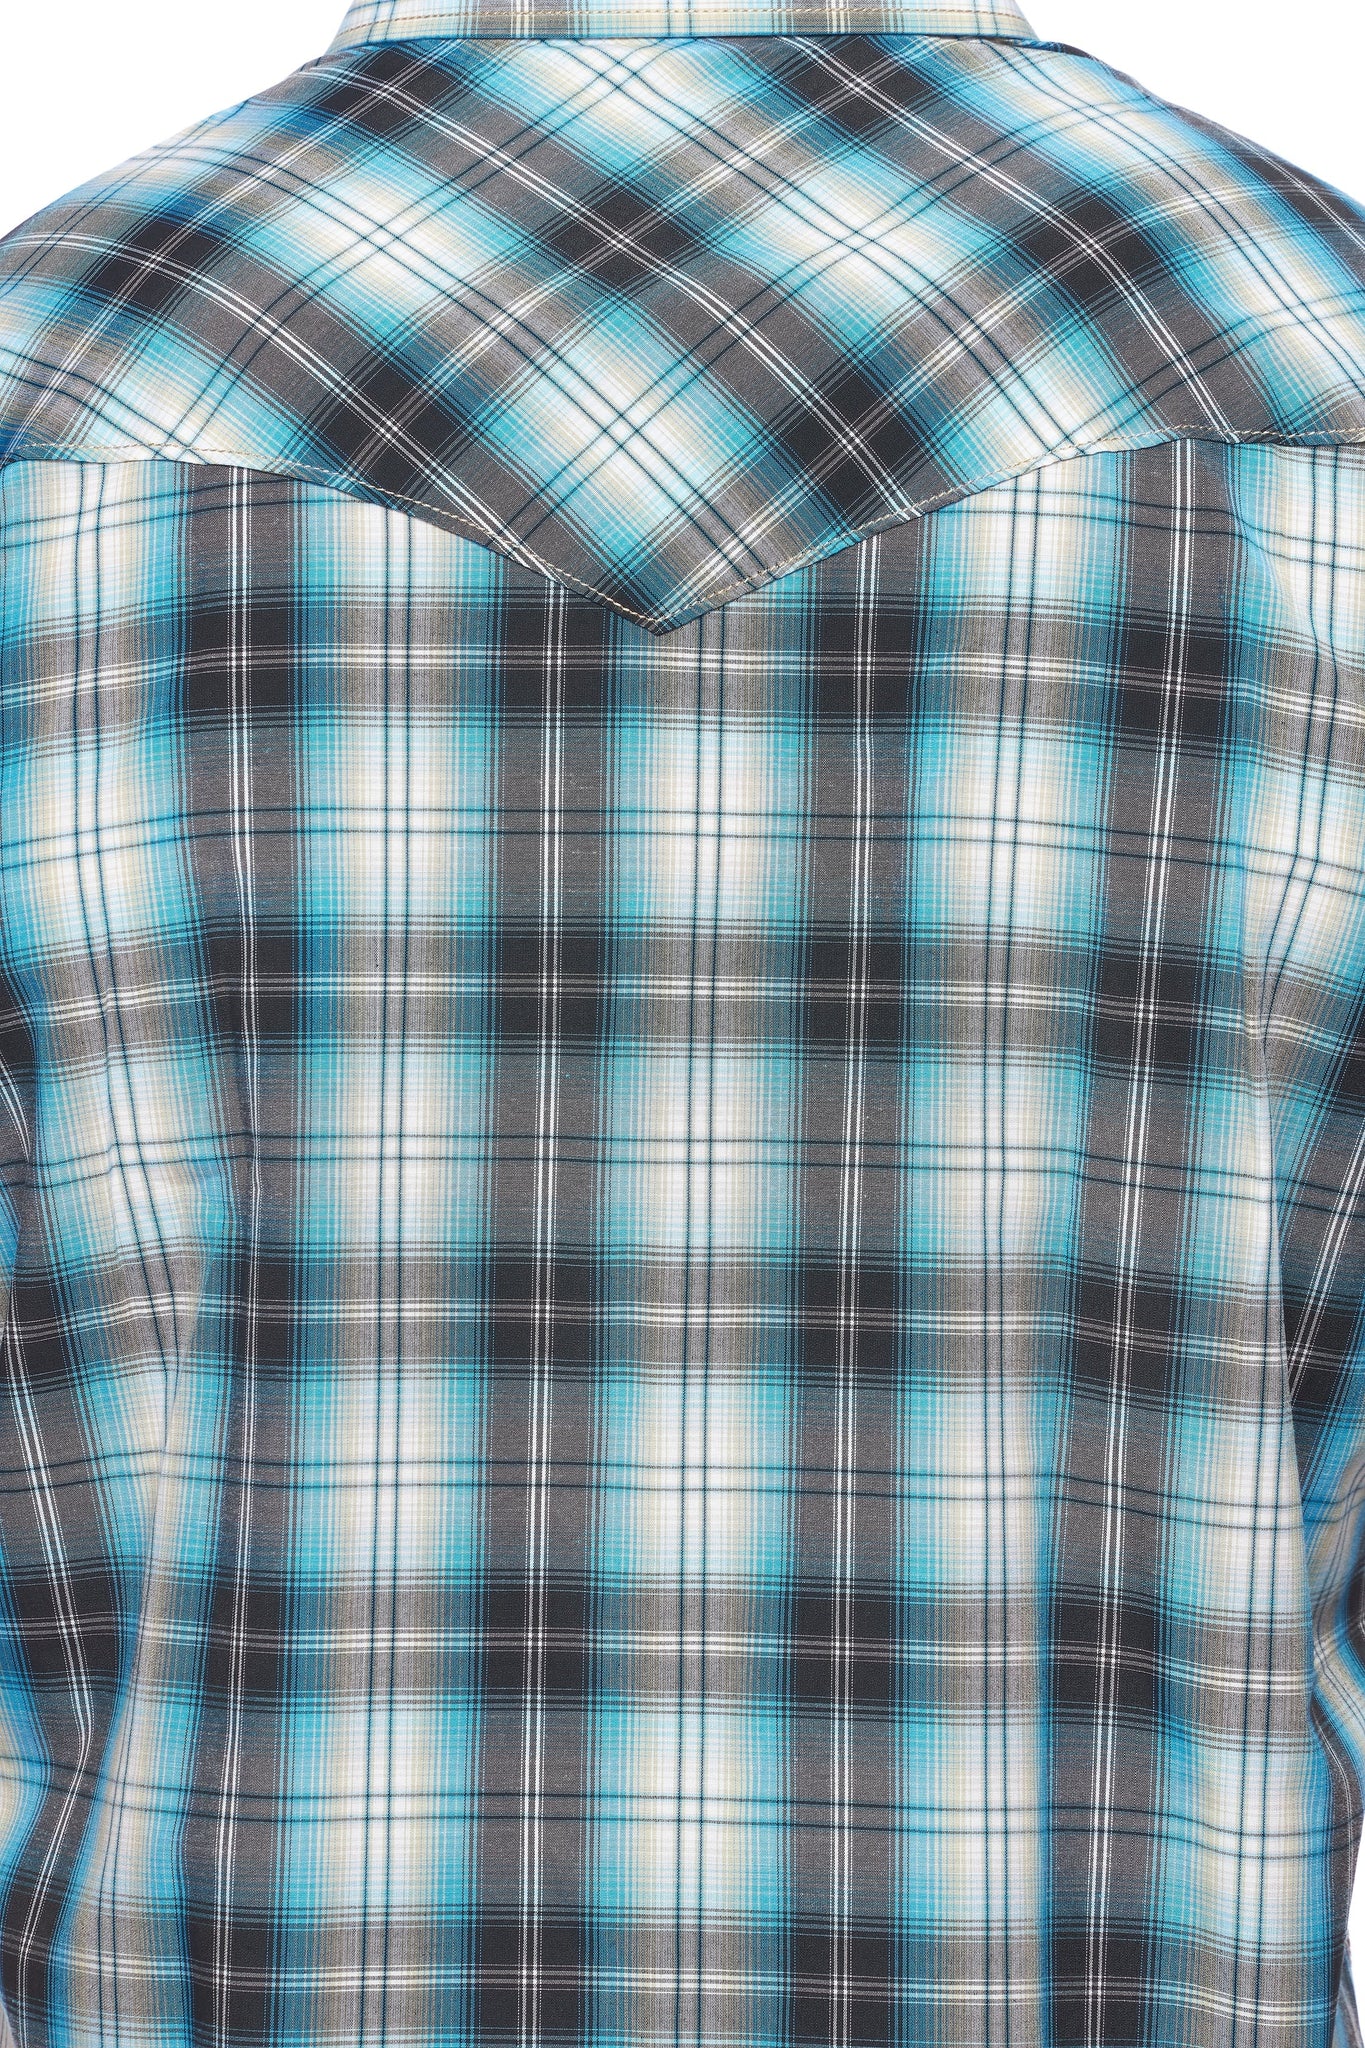 Men's Western Short Sleeve Pearl Snaps Plaid Shirt -PS400S-478